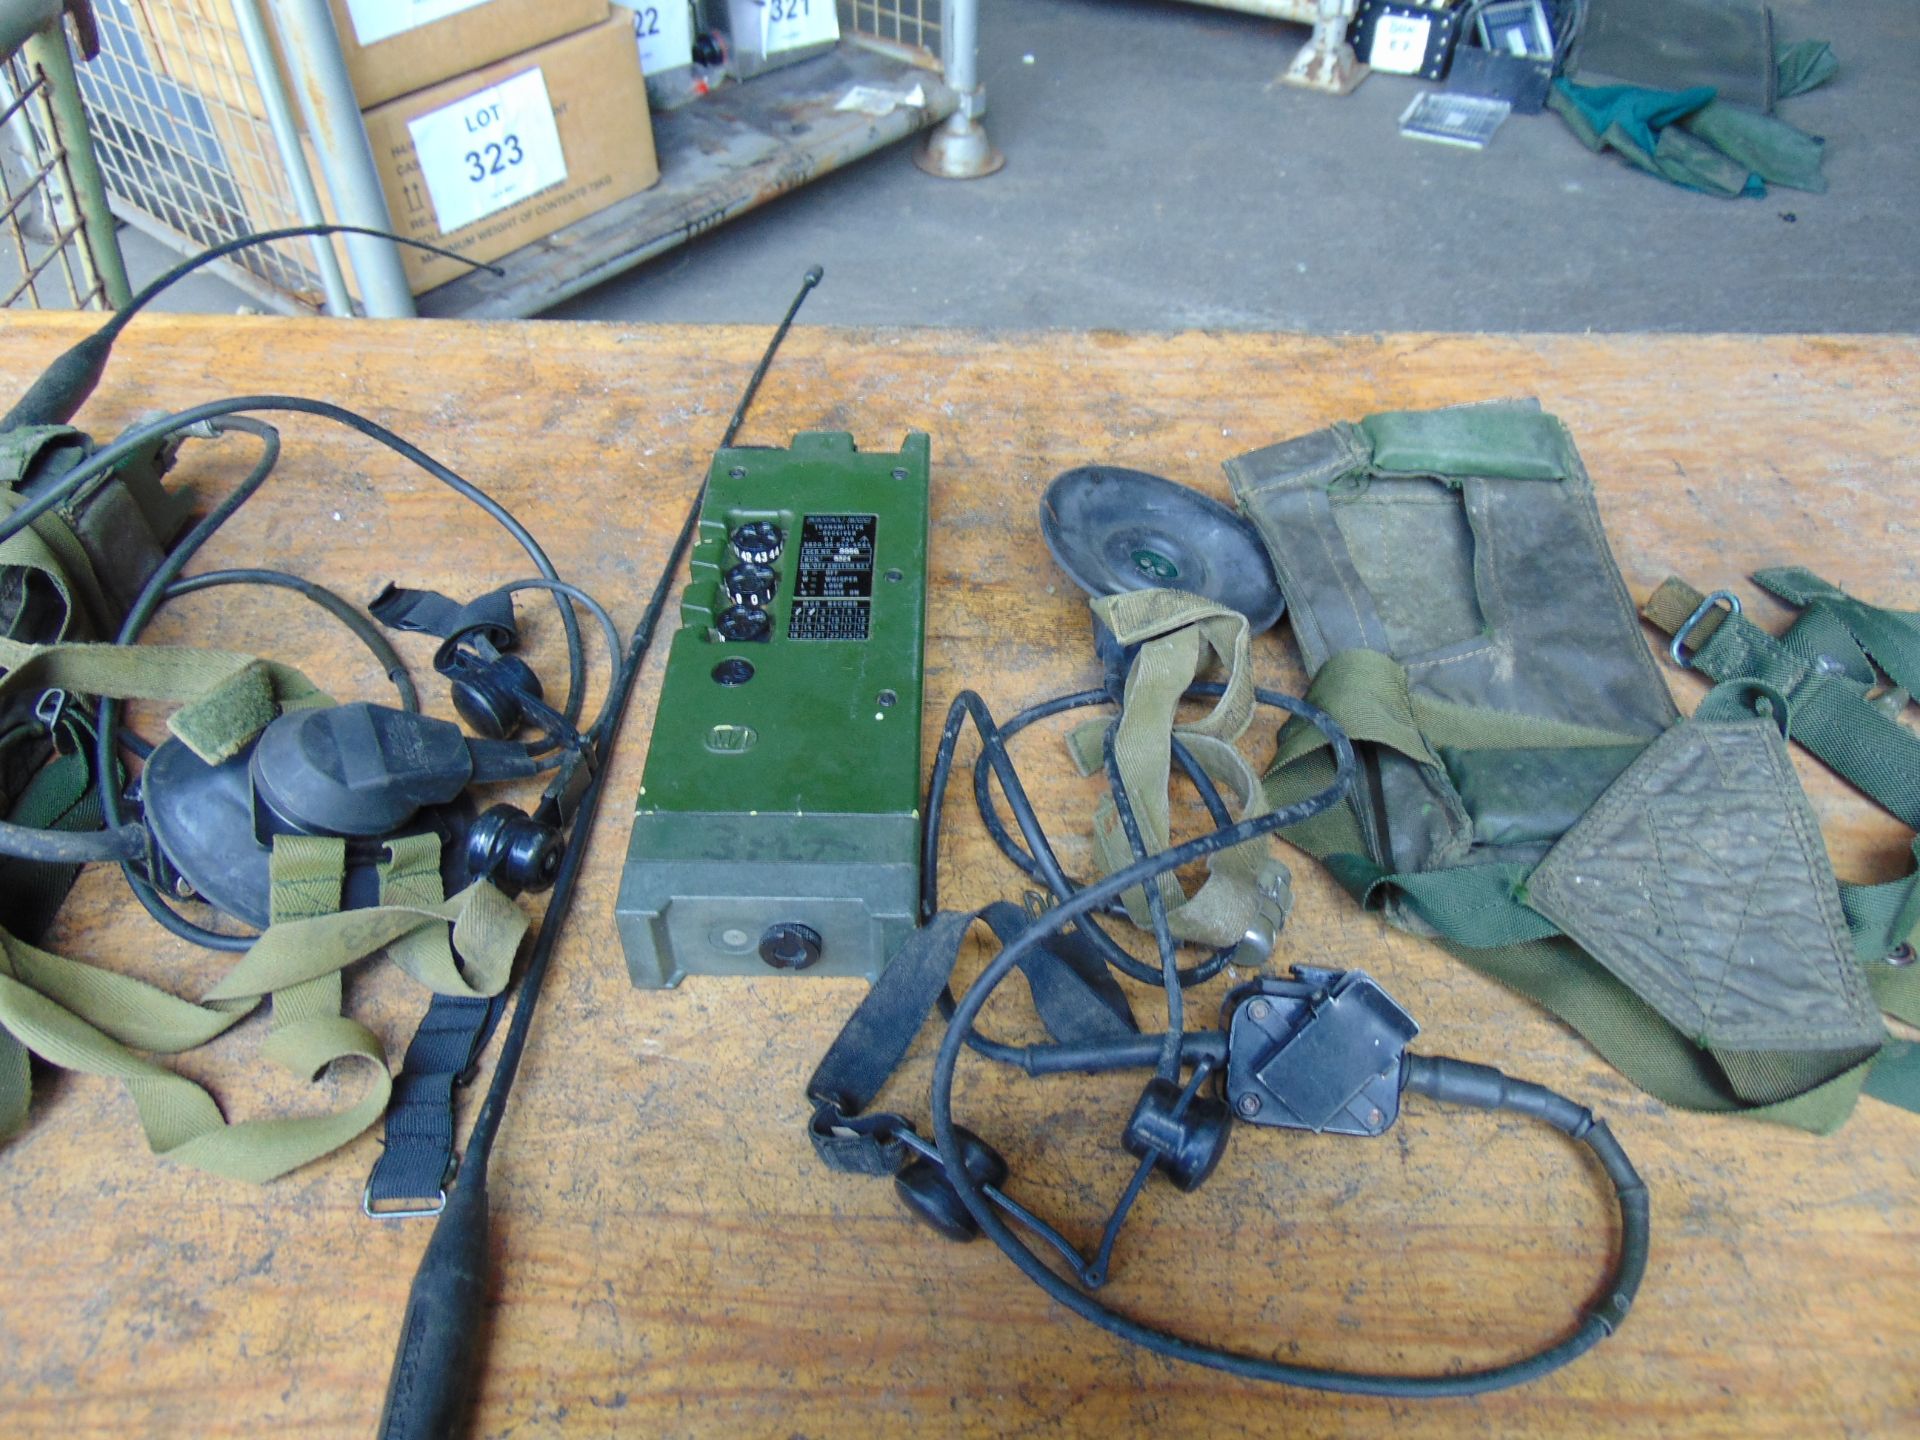 2 x RT 349 British Army Transmitter / Receiver c/w Pouch, Headset, Antenna and Battery Cassette. - Bild 5 aus 5